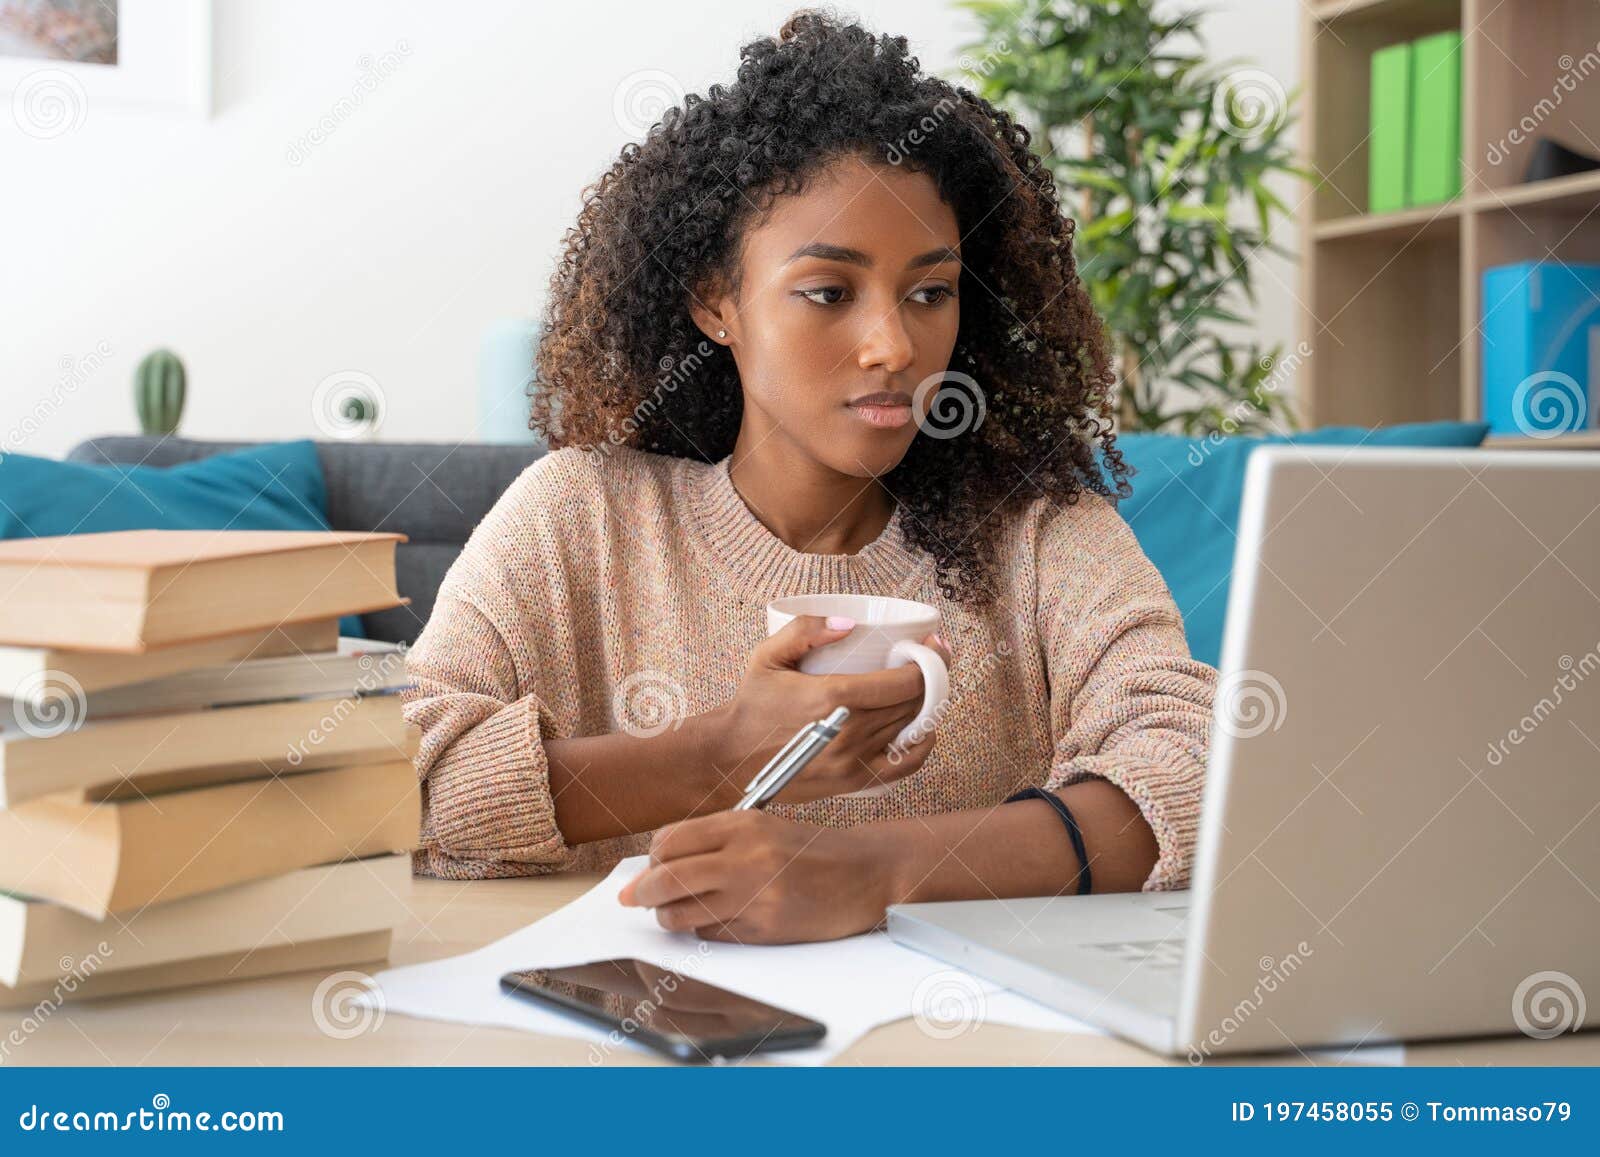 black person doing homework